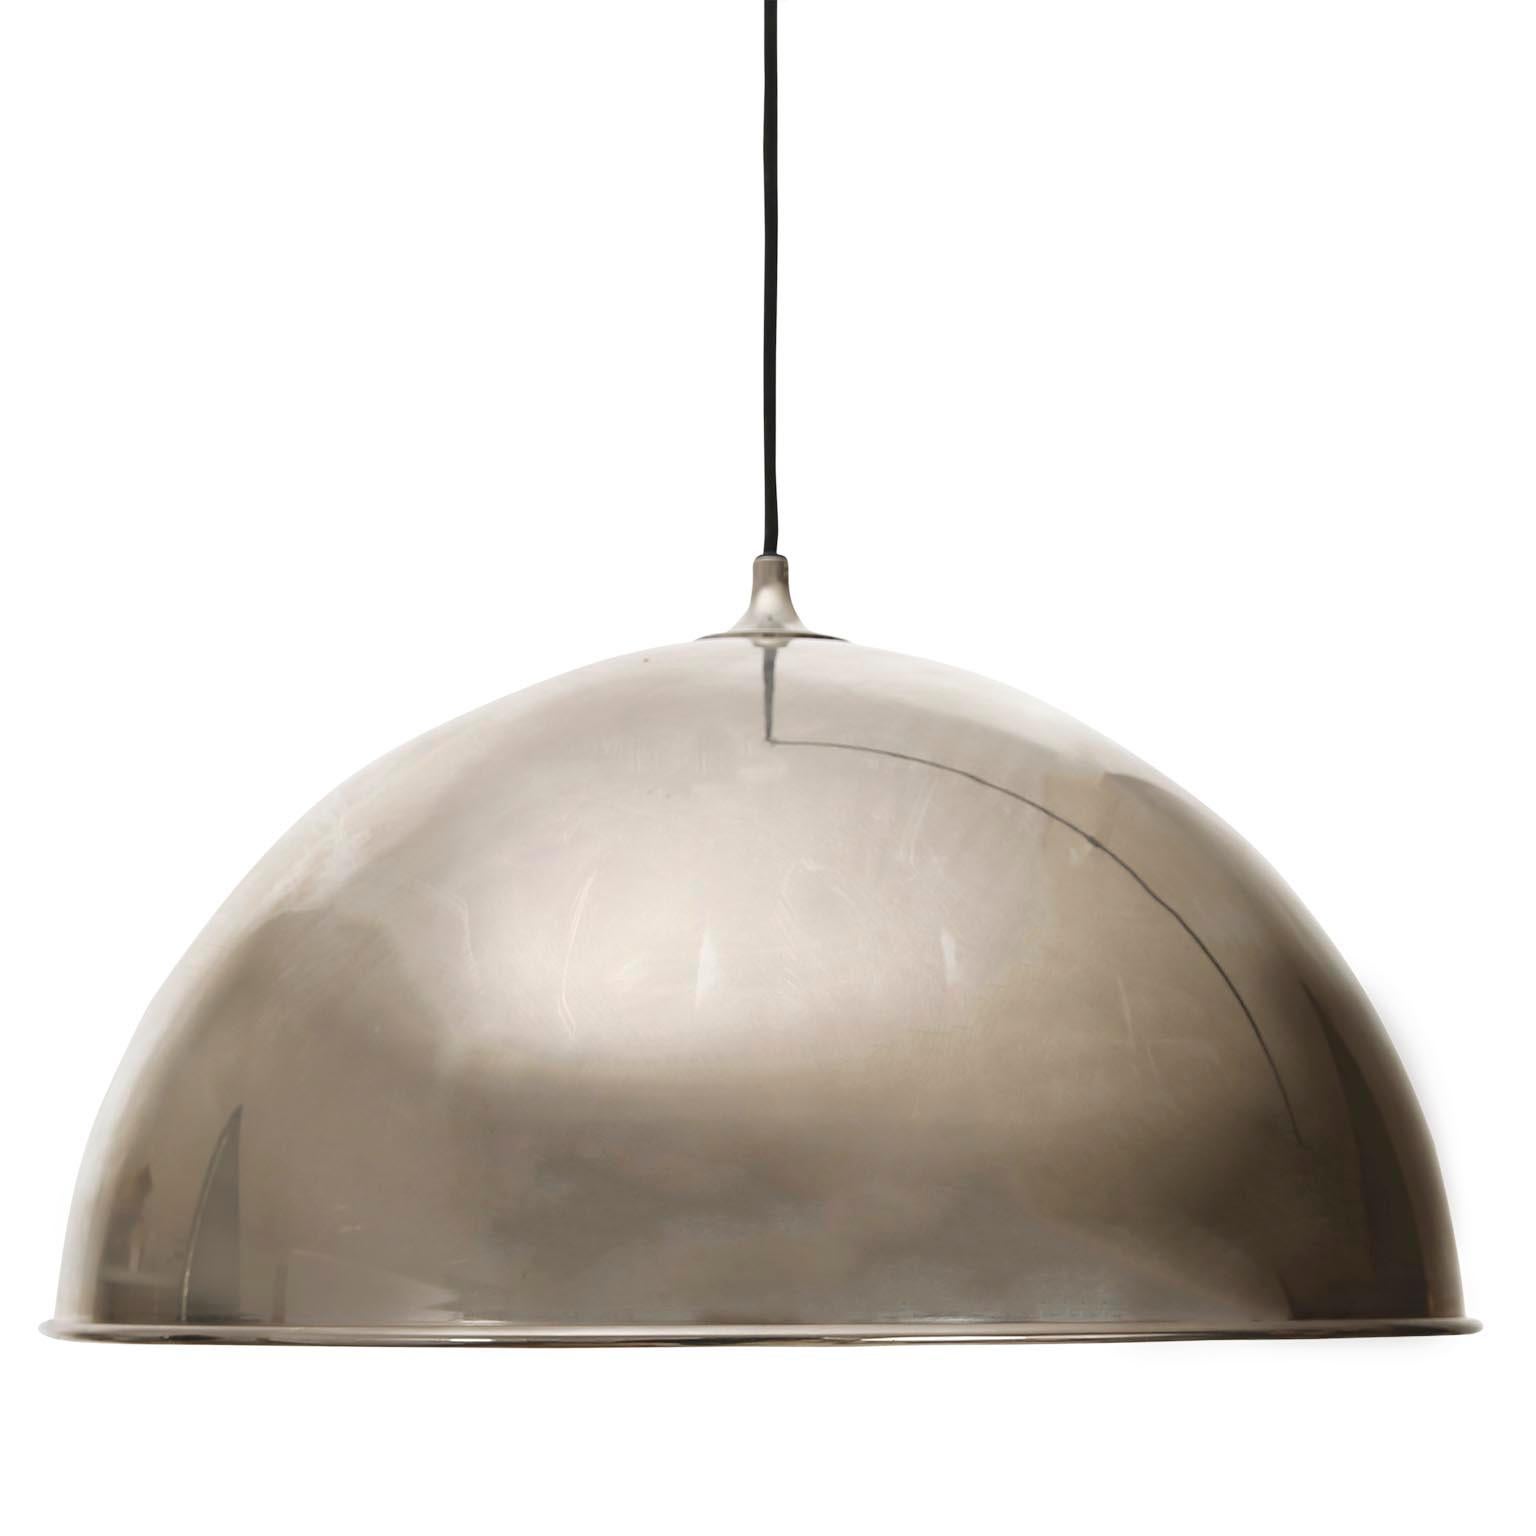 Mid-Century Modern Florian Schulz Dome Pendant Light, Patinated Nickel, Counterweight, 1970